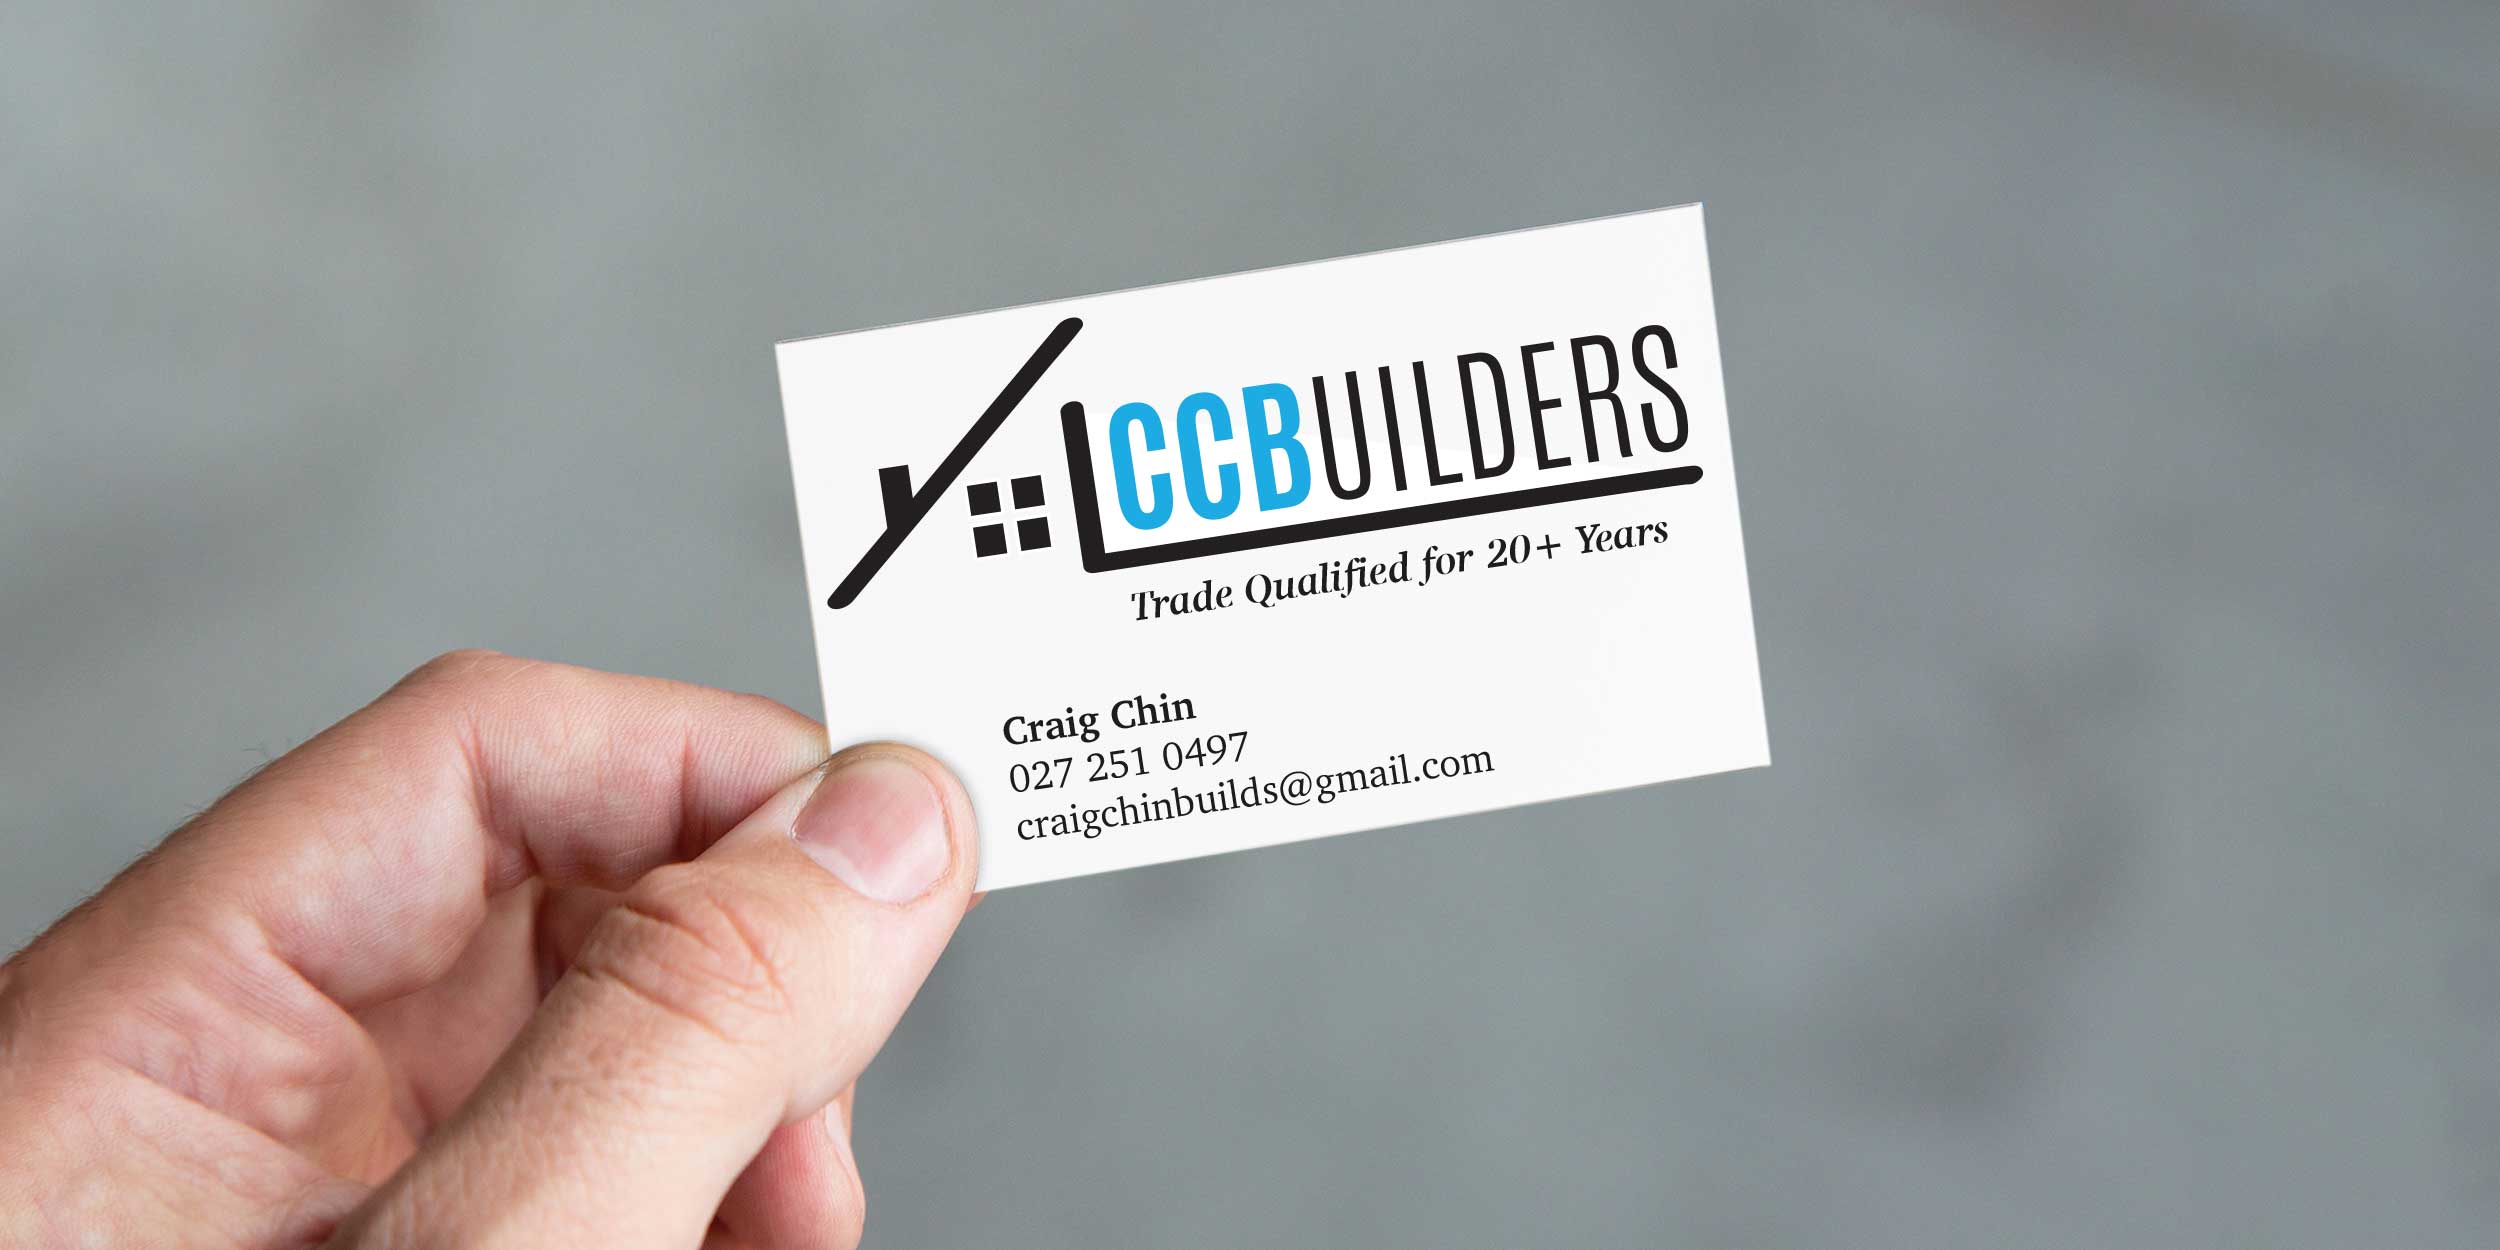 CC Builders Brand Identity and graphic design